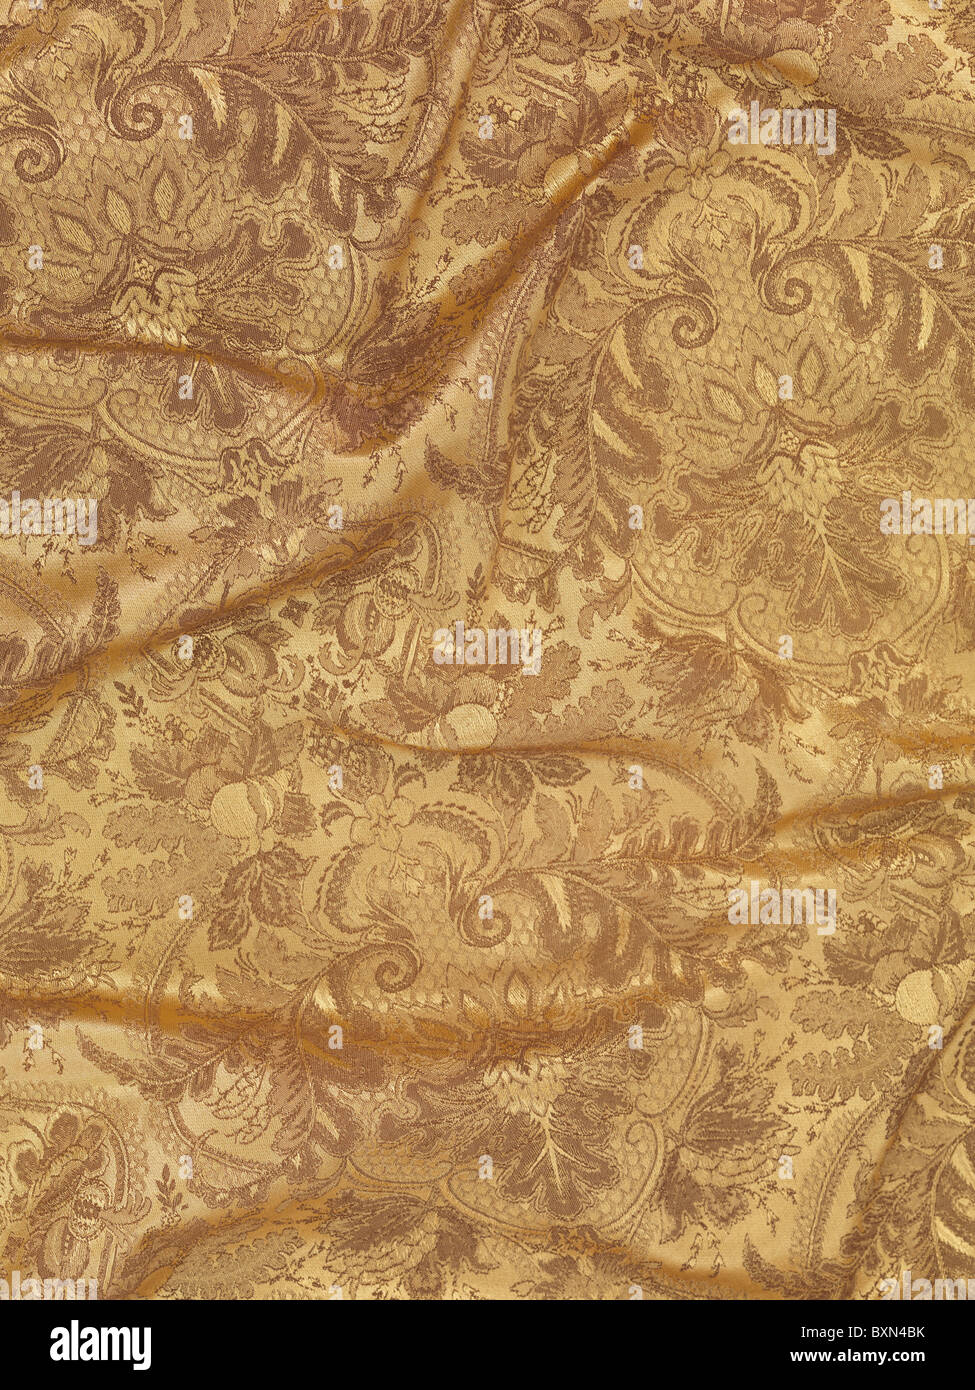 Shiny gold fabric texture background Stock Photo